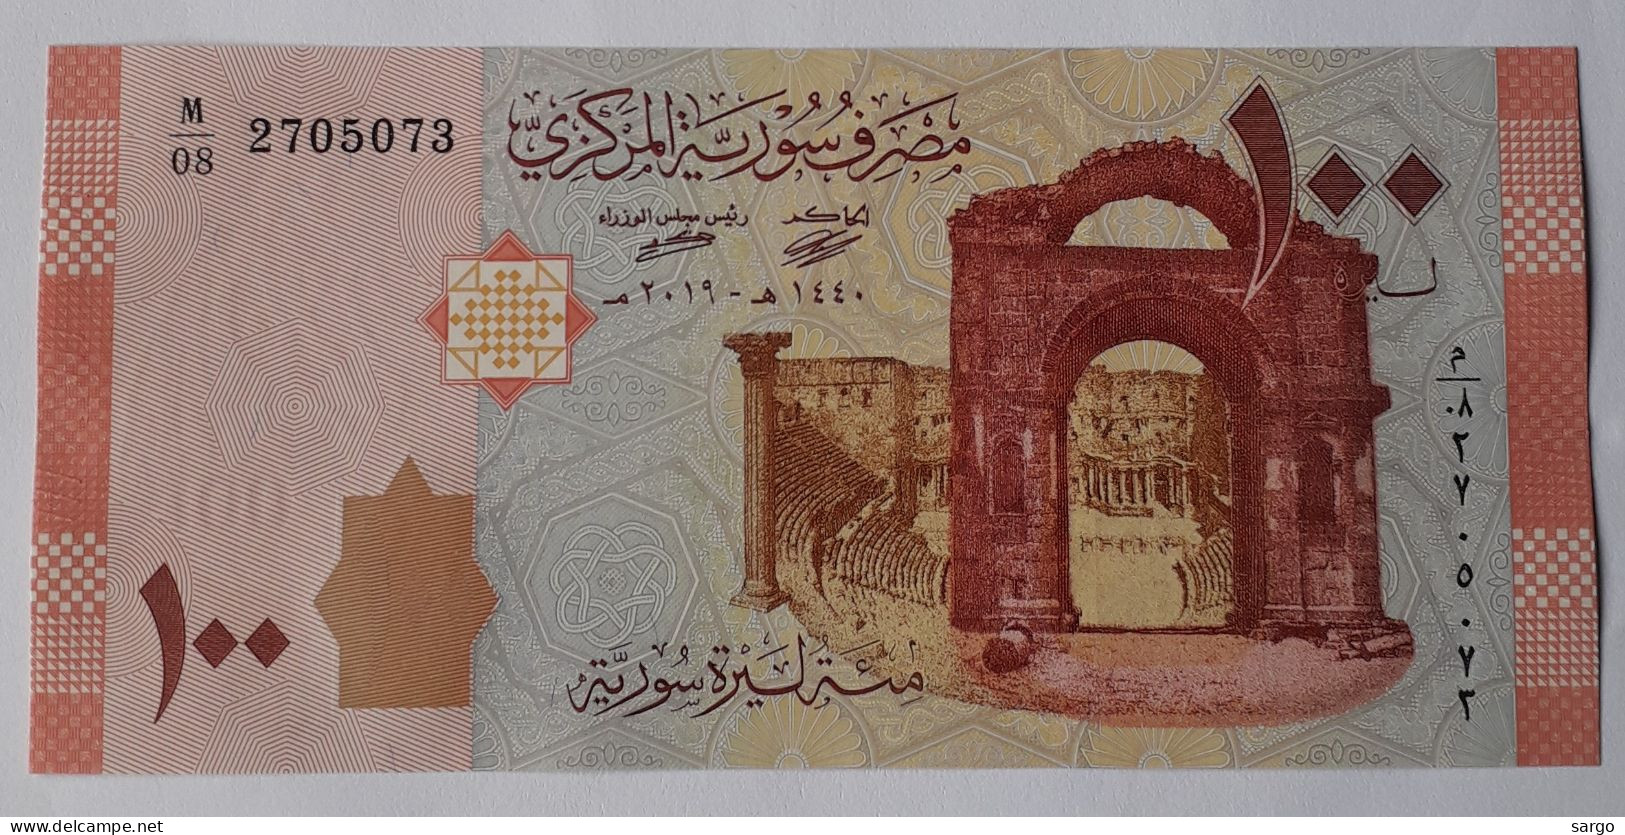 SYRIA  - 100 POUND - P 113b  (2019) - UNC -  BANKNOTES - PAPER MONEY - Syria